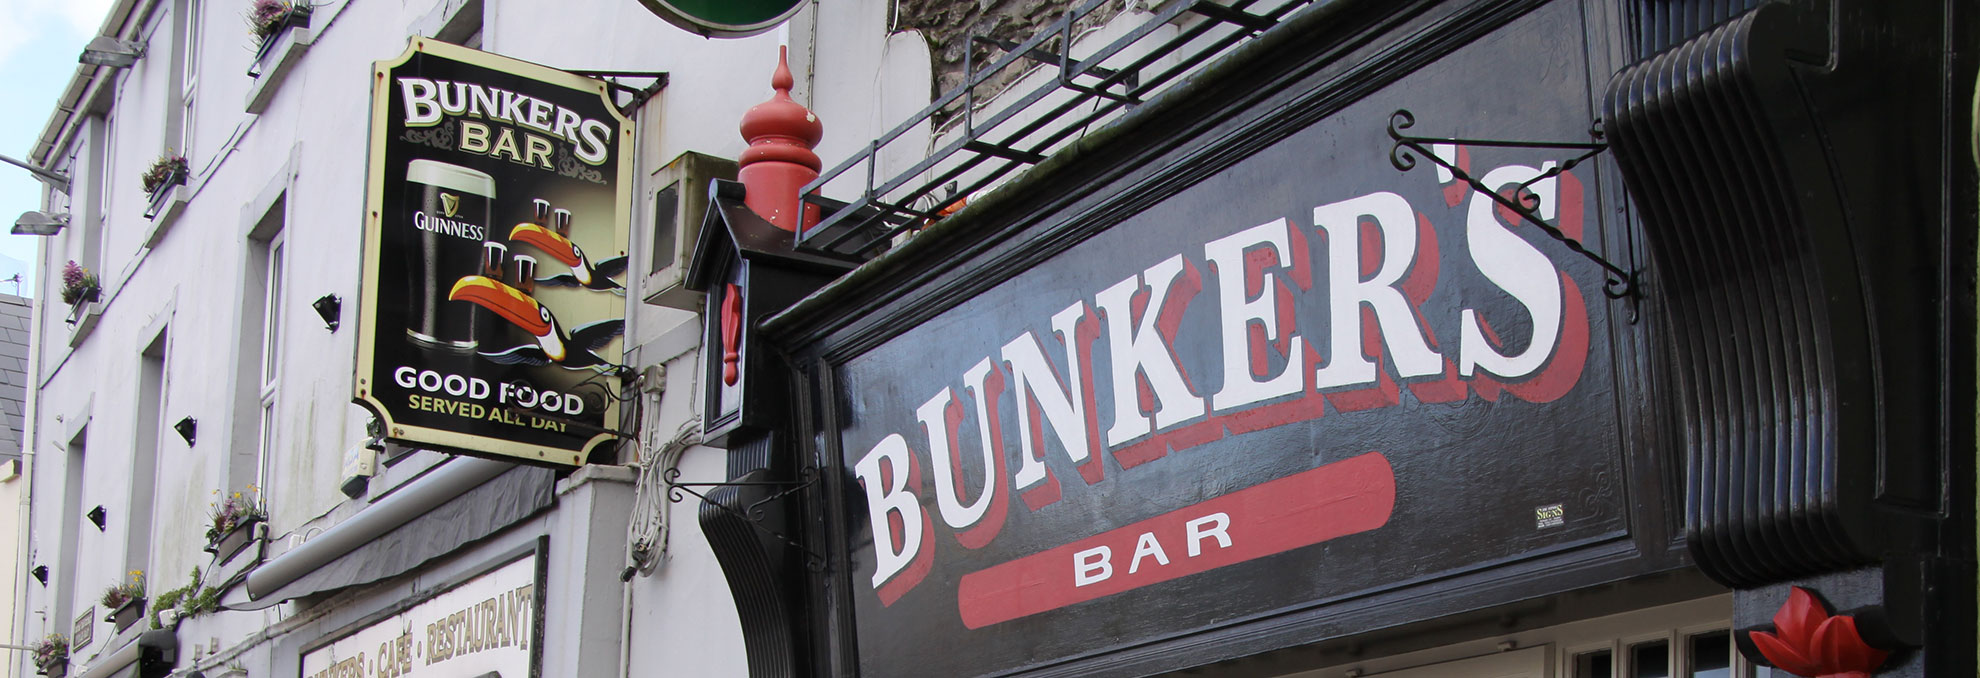 Bunkers Bar & Restaurant, Killorglin